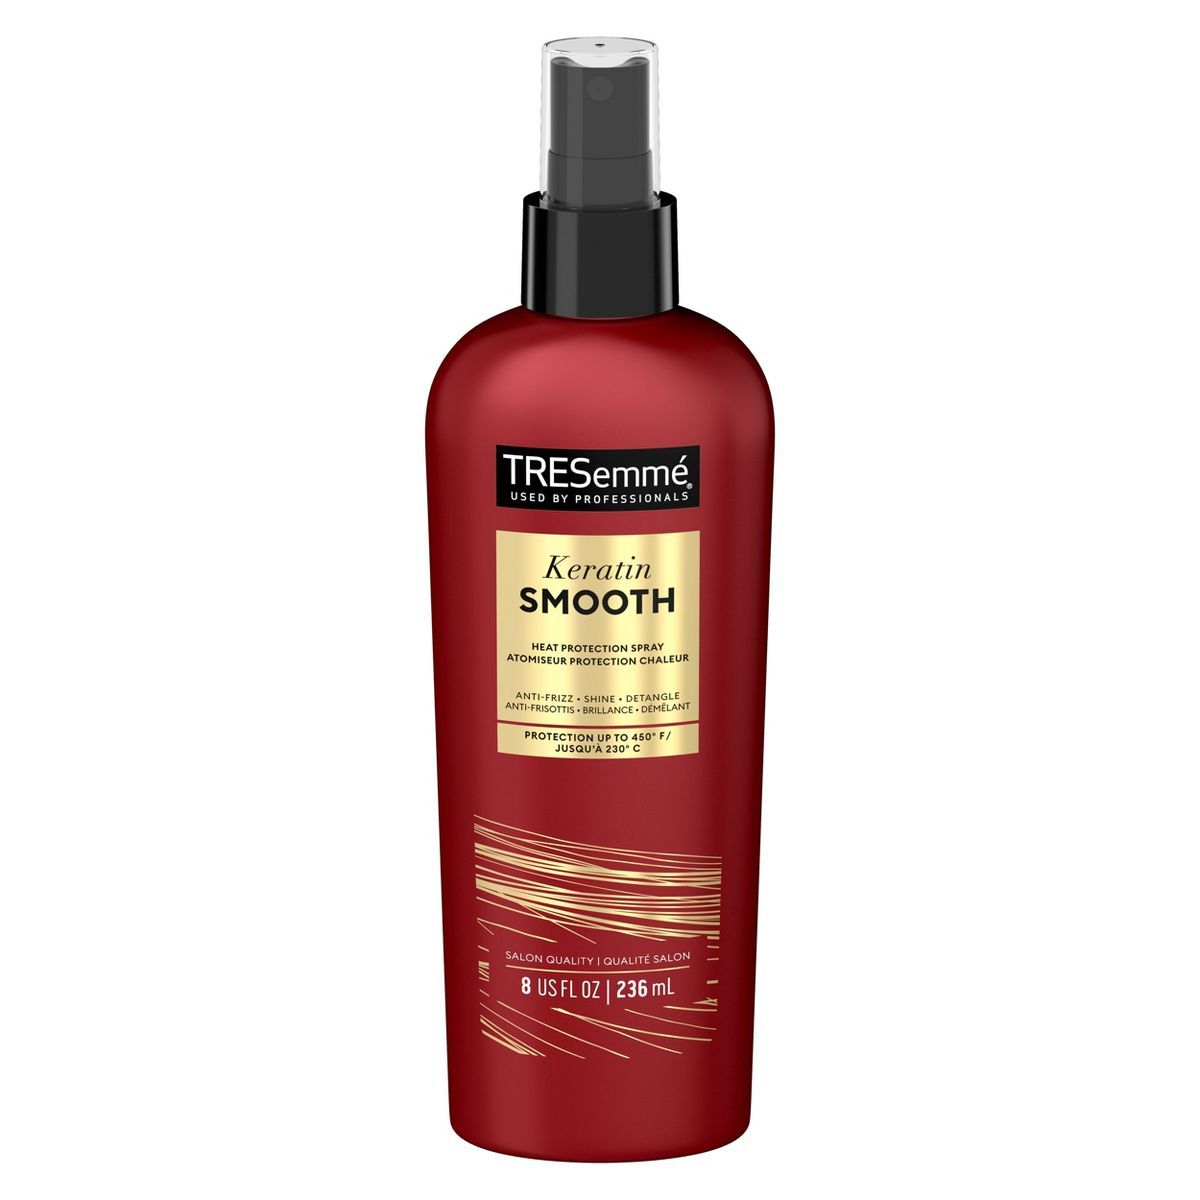 Tresemme Keratin Smooth Heat Protection Hairspray - 8 fl oz | Target